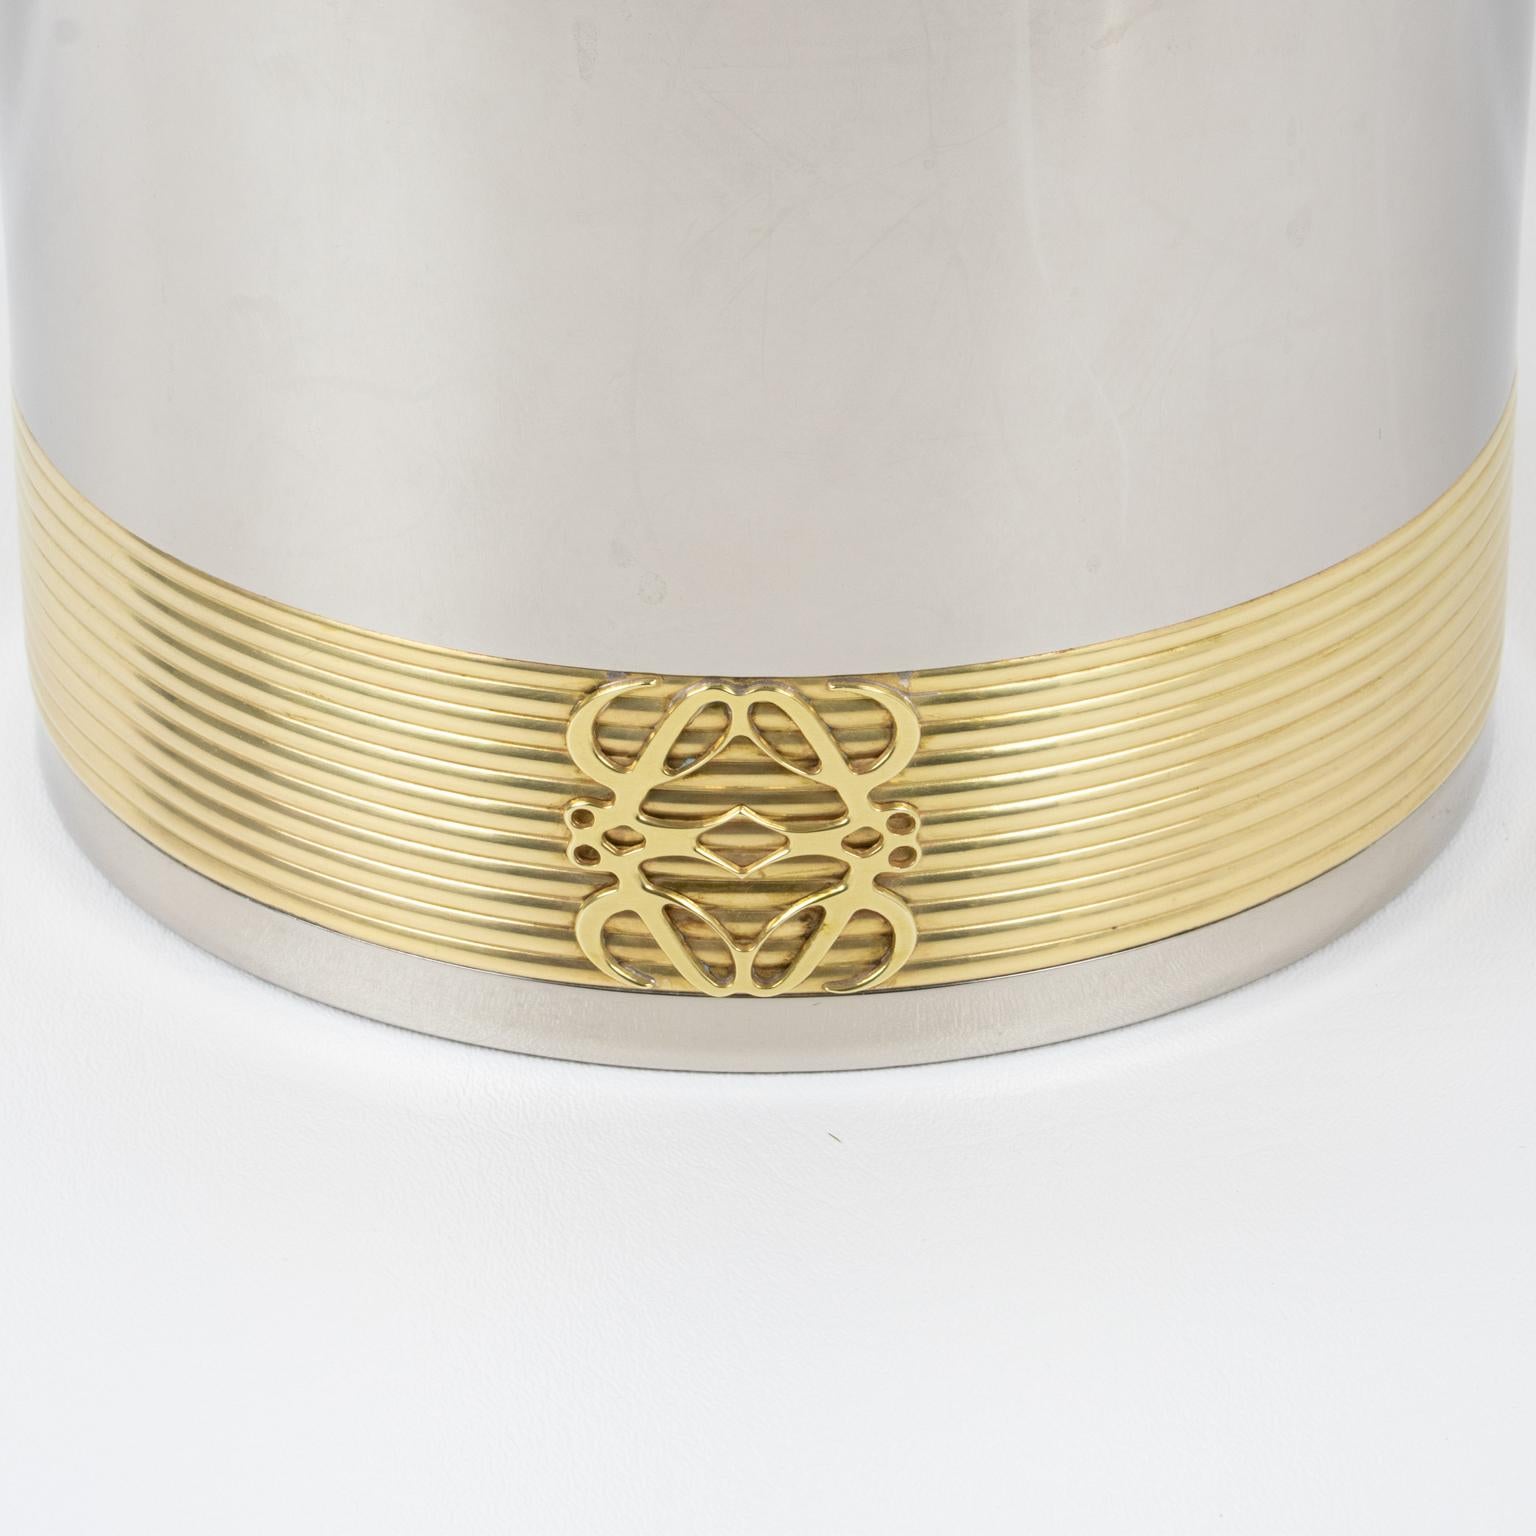 Loewe Spain Chrome and Gilded Brass Barware Ice Bucket For Sale 1